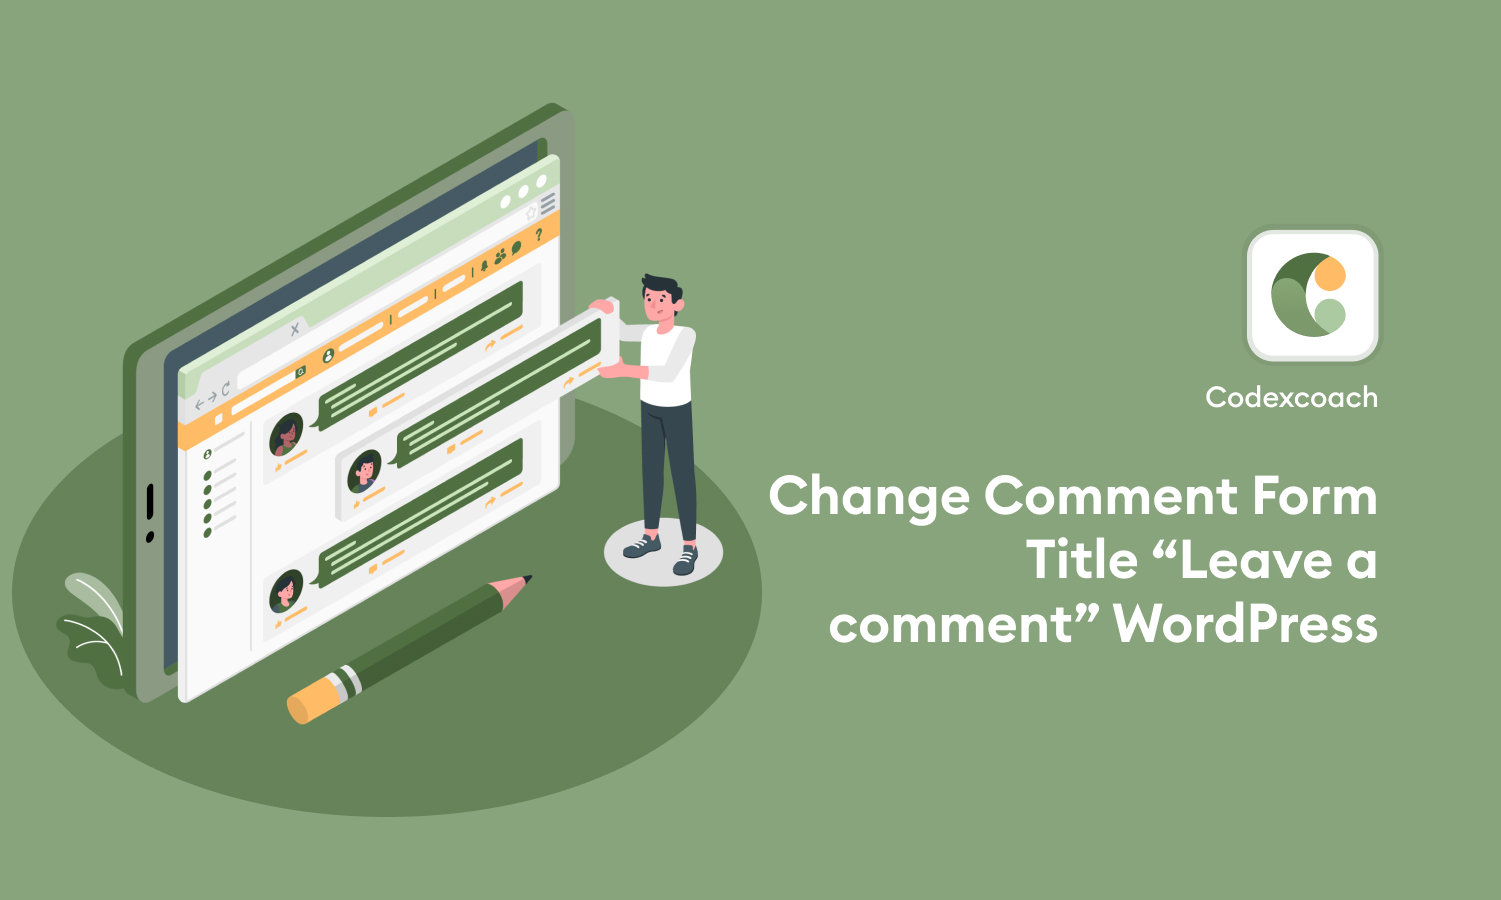 Change Comment Form Title “Leave a comment” WordPress